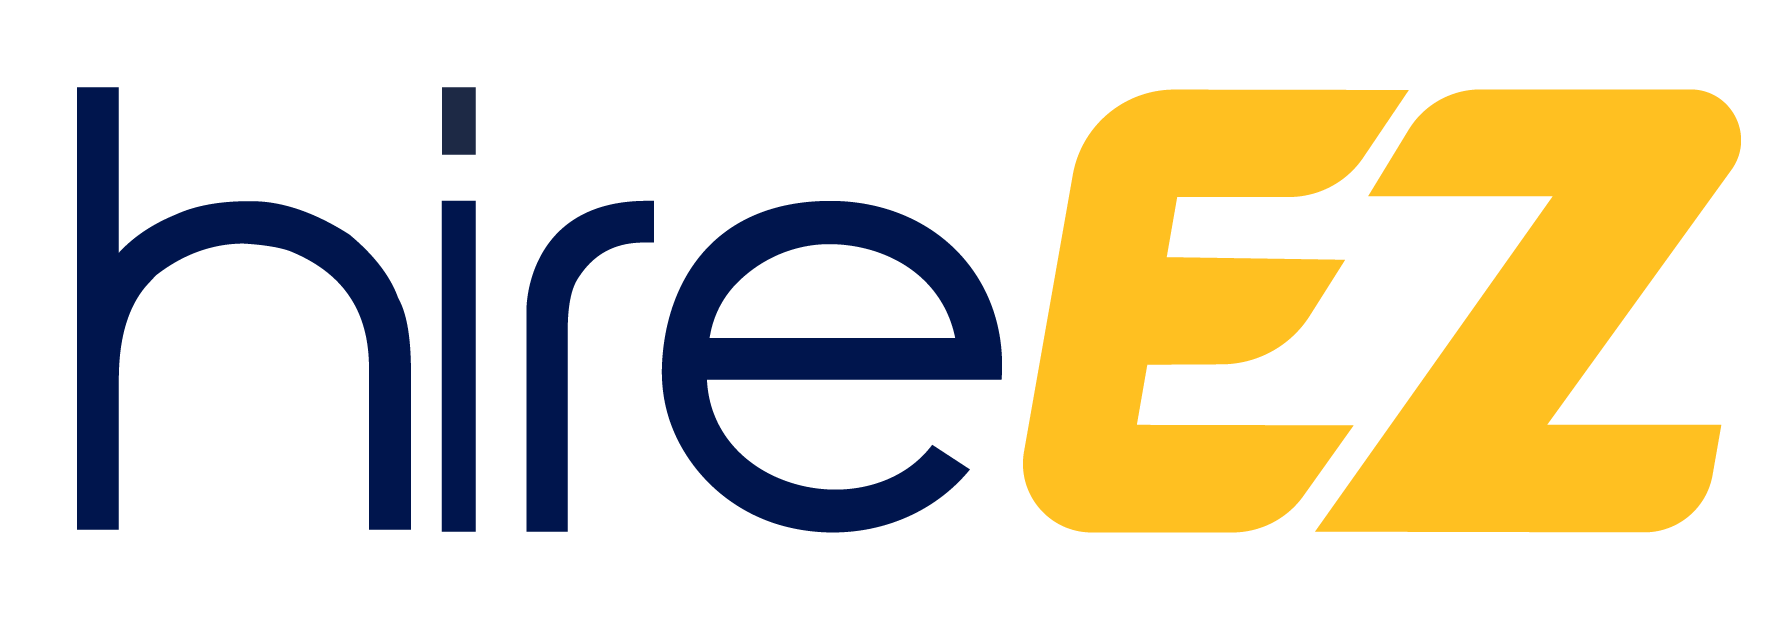 Hireez logo